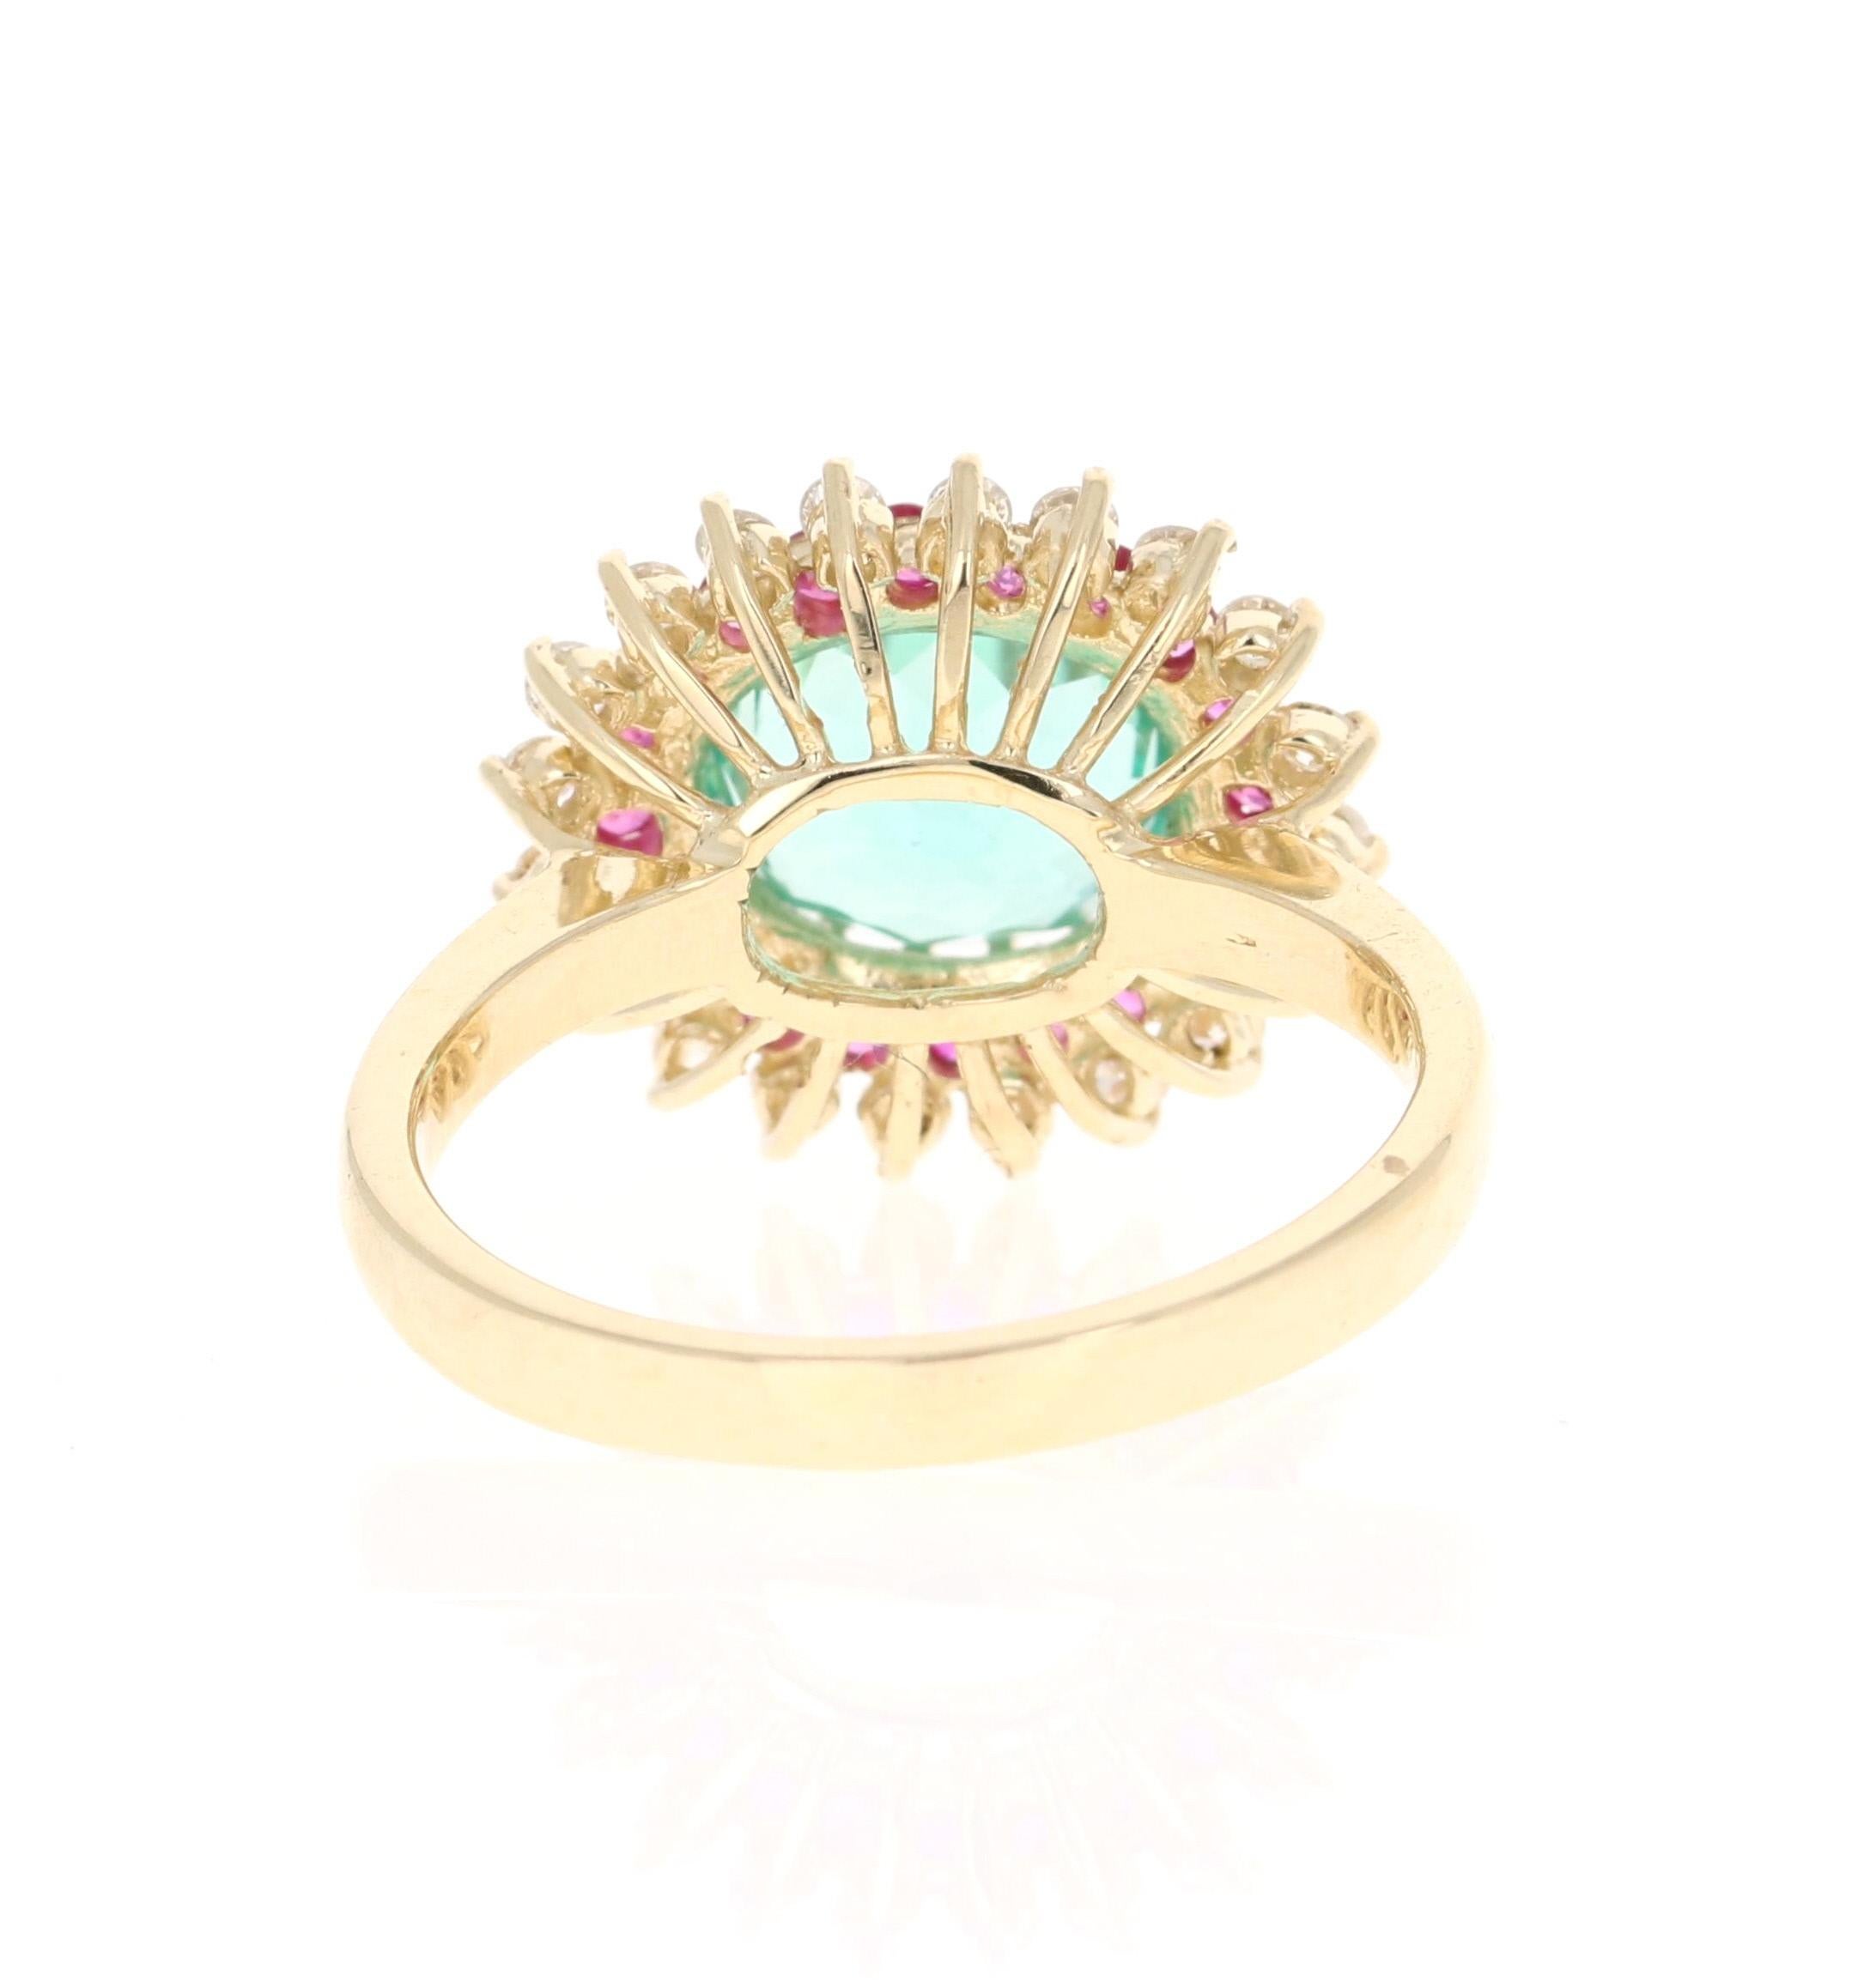 Oval Cut 3.35 Carat Apatite Pink Sapphire Diamond 14 Karat Yellow Gold Ring